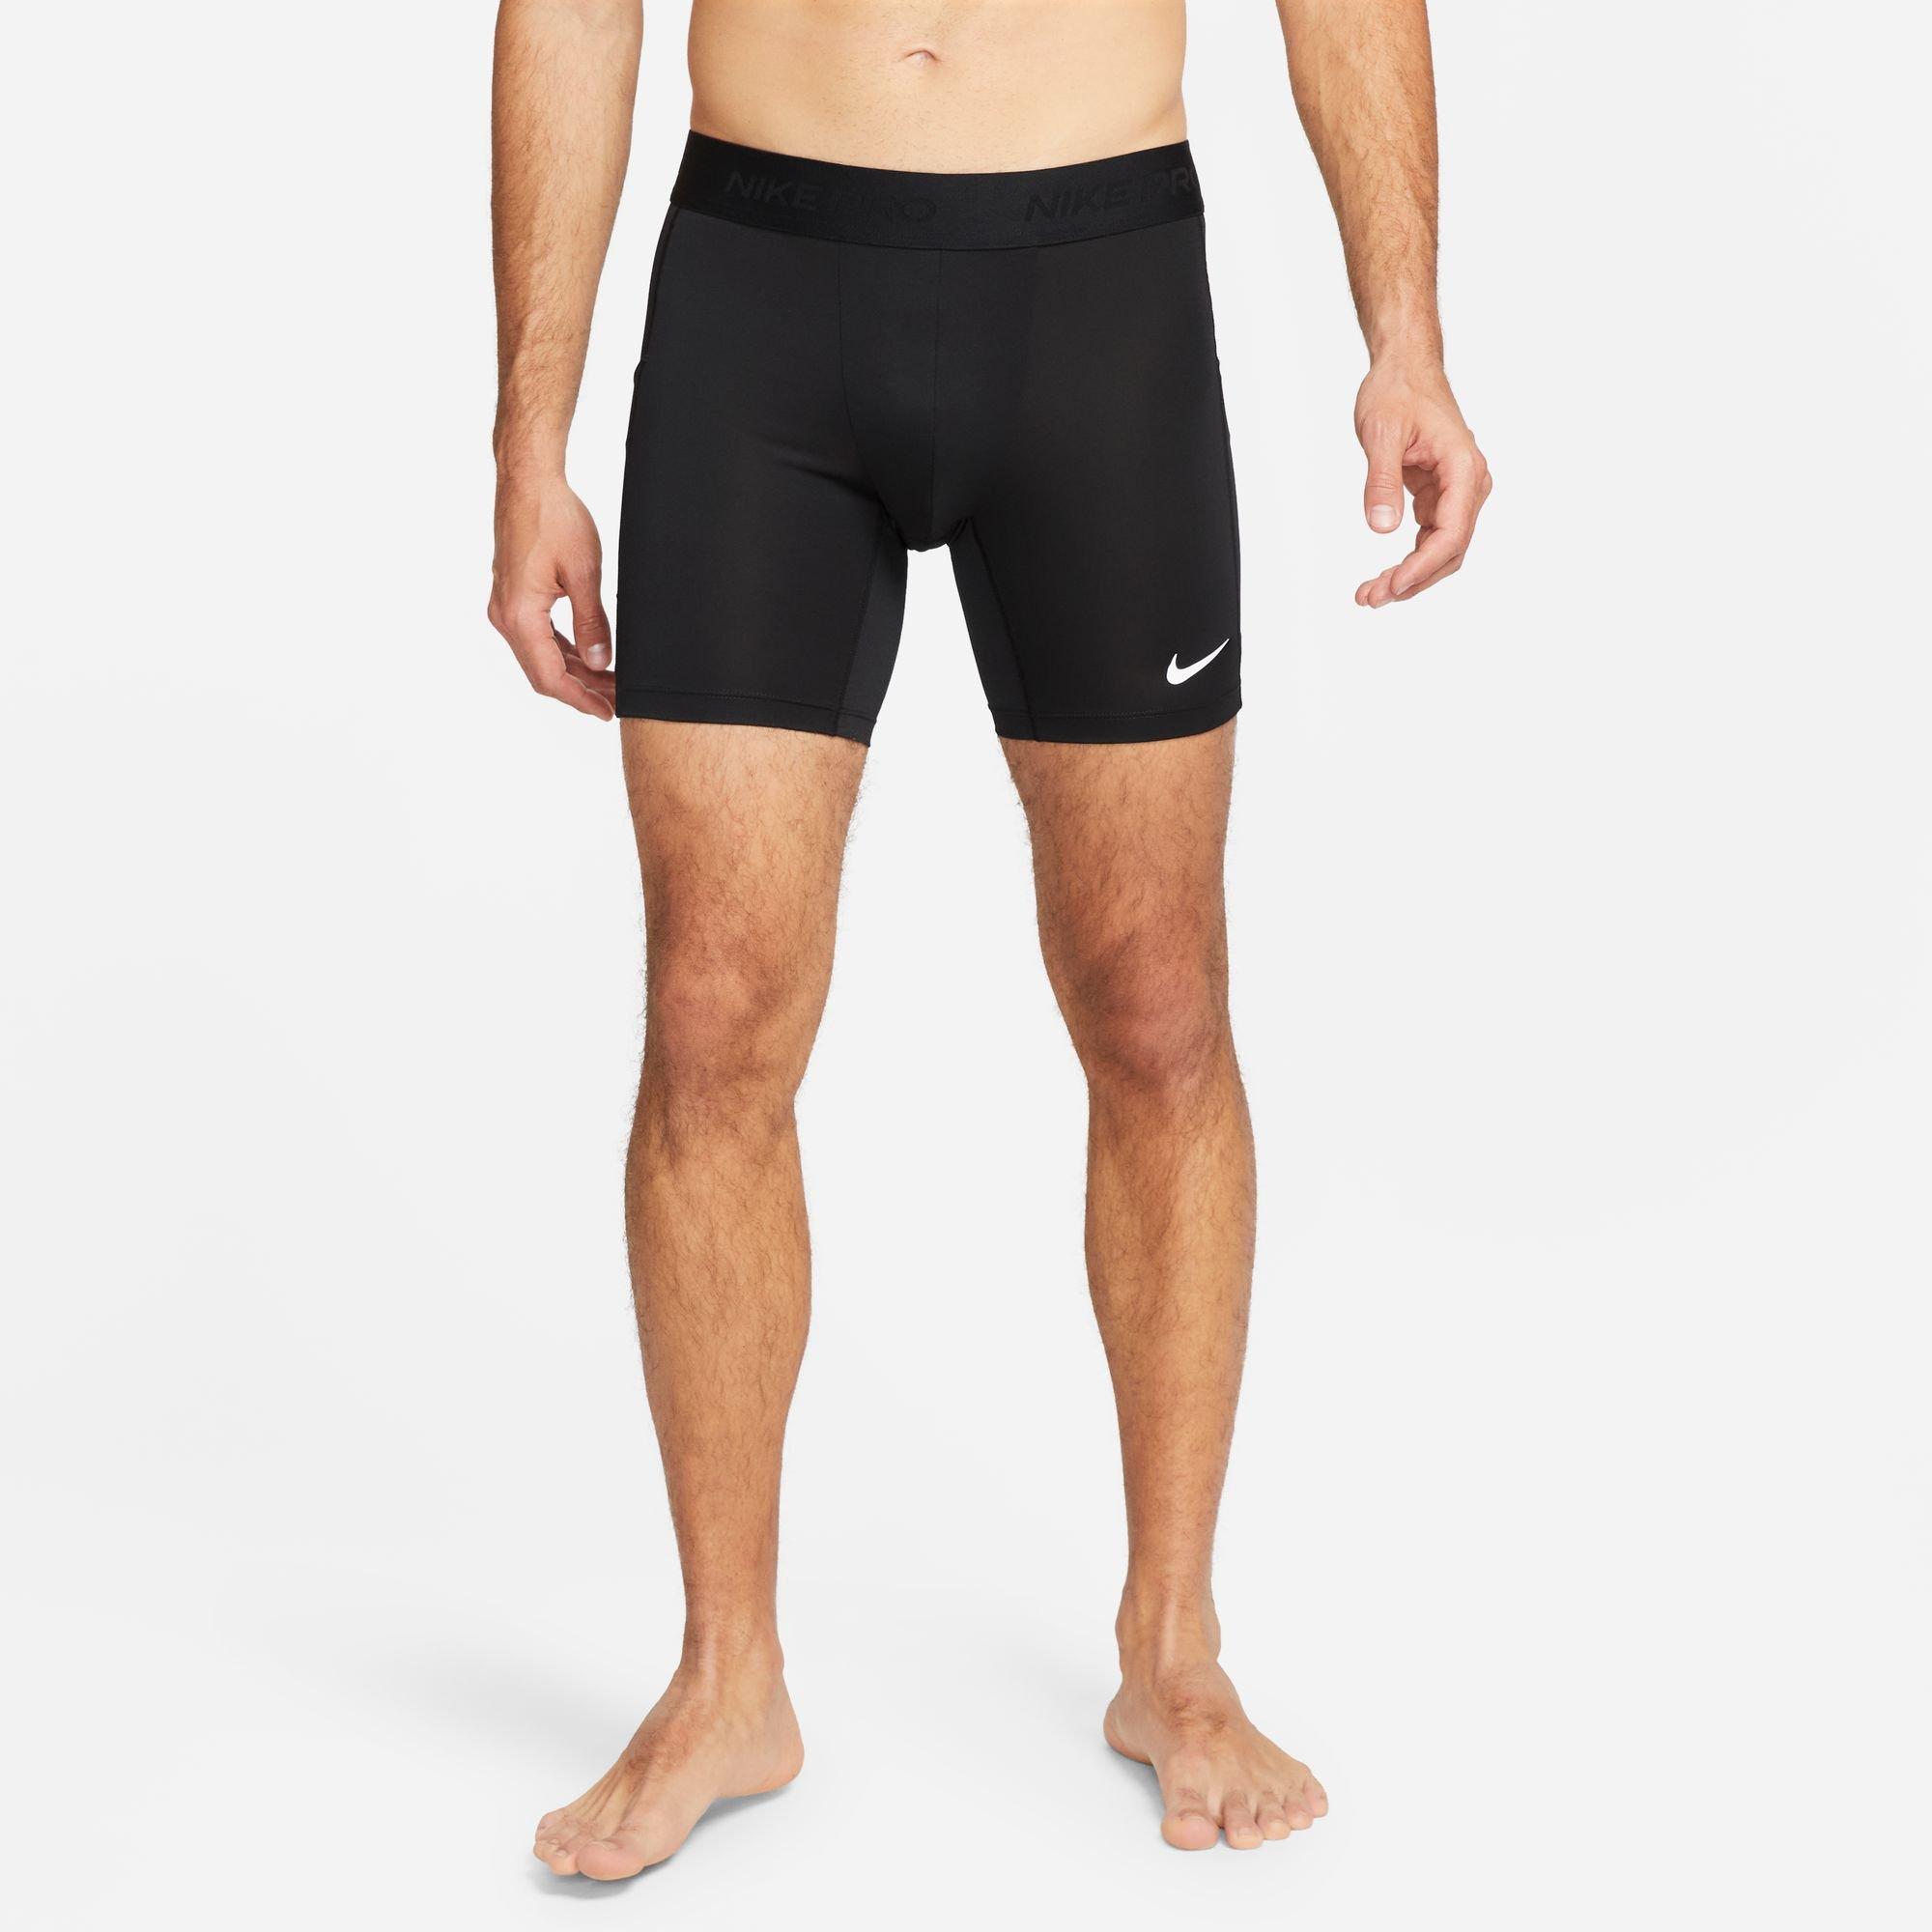 Men's PRO Dri-Fit 7 Shorts from Nike